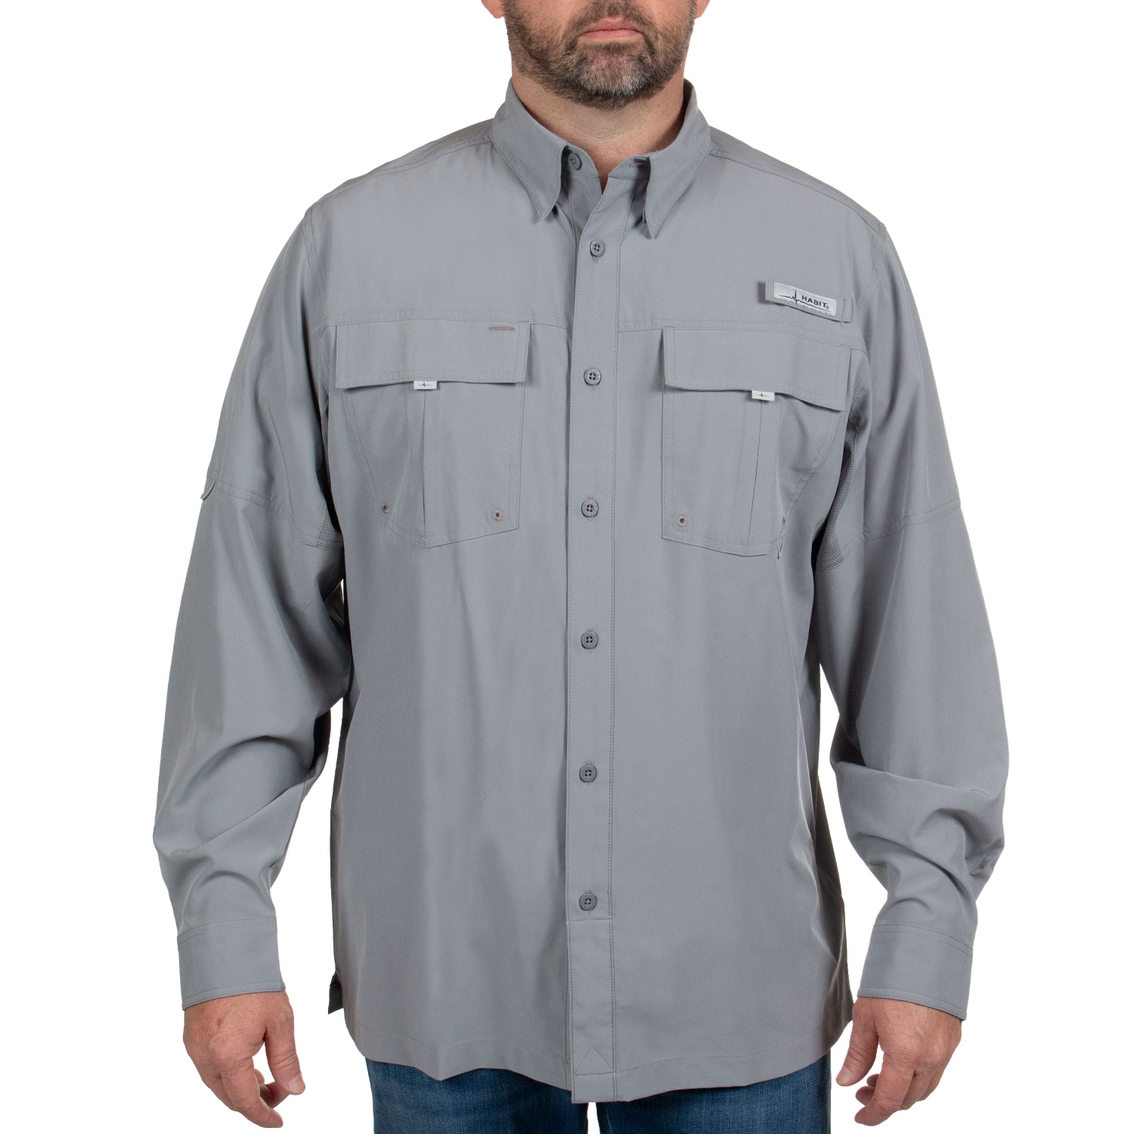 Habit Men's Forage River Long Sleeve River Guide Fishing Shirt, Shirts, Clothing & Accessories